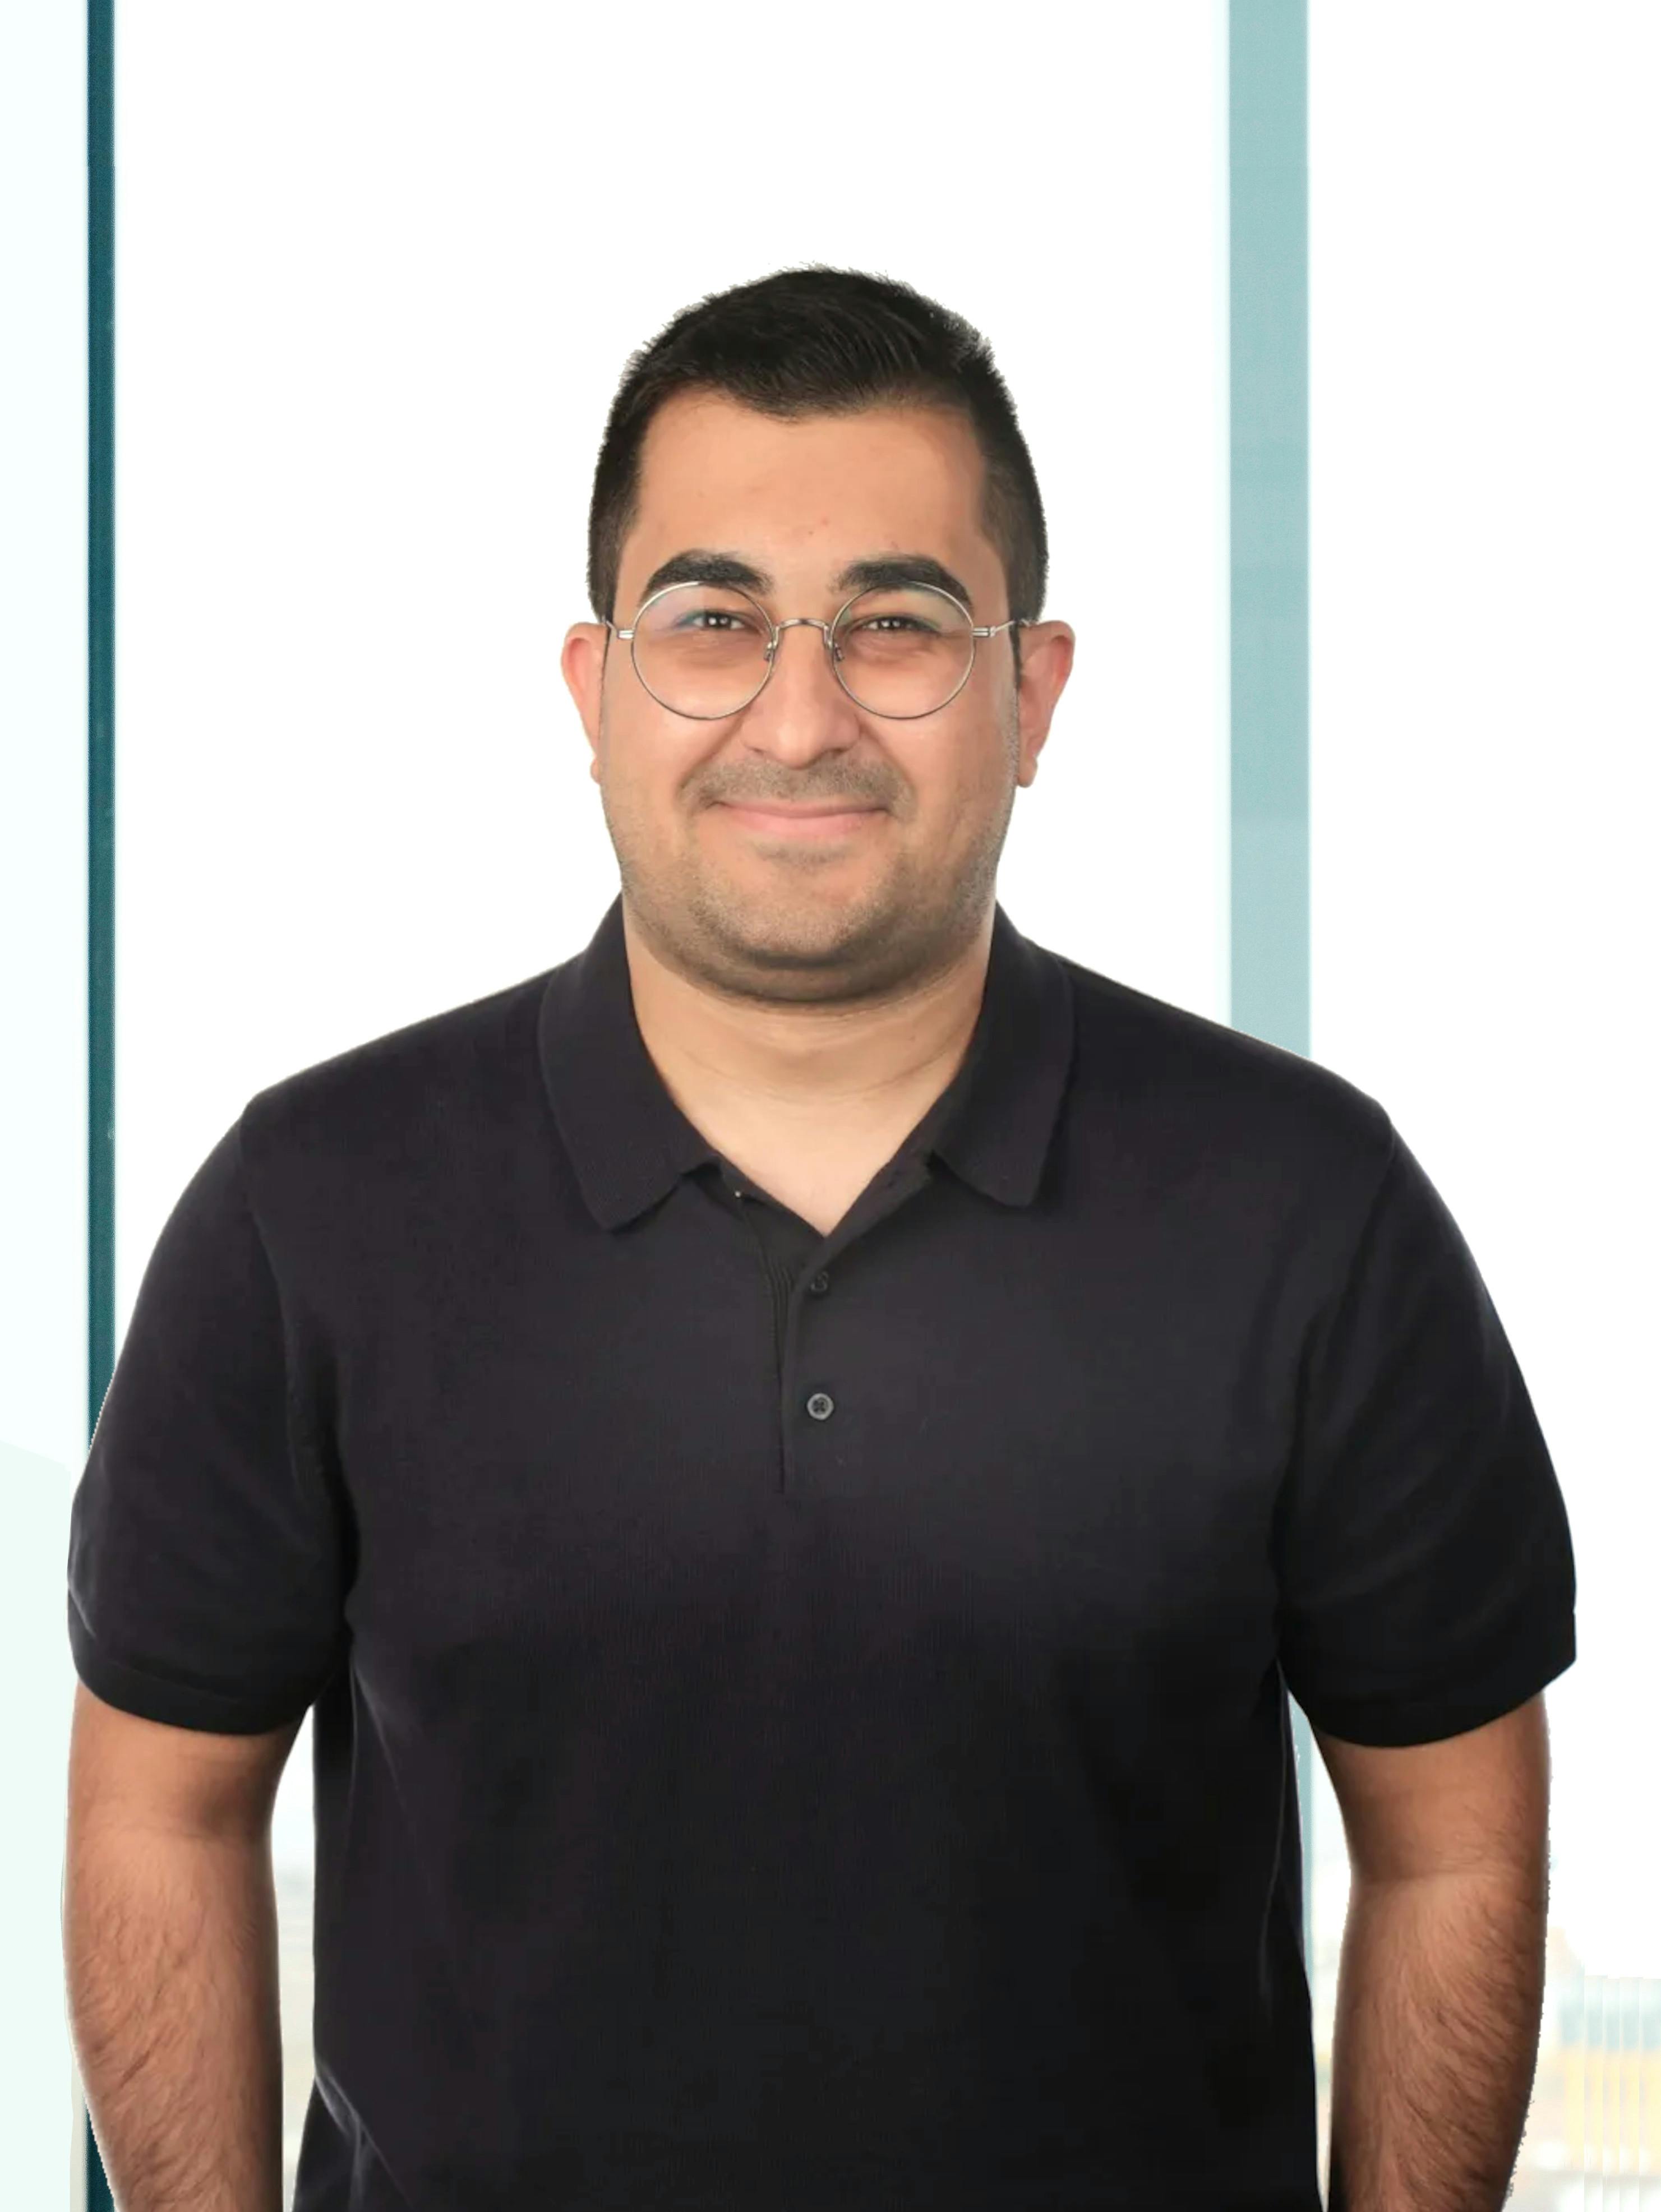 Amir Saemi